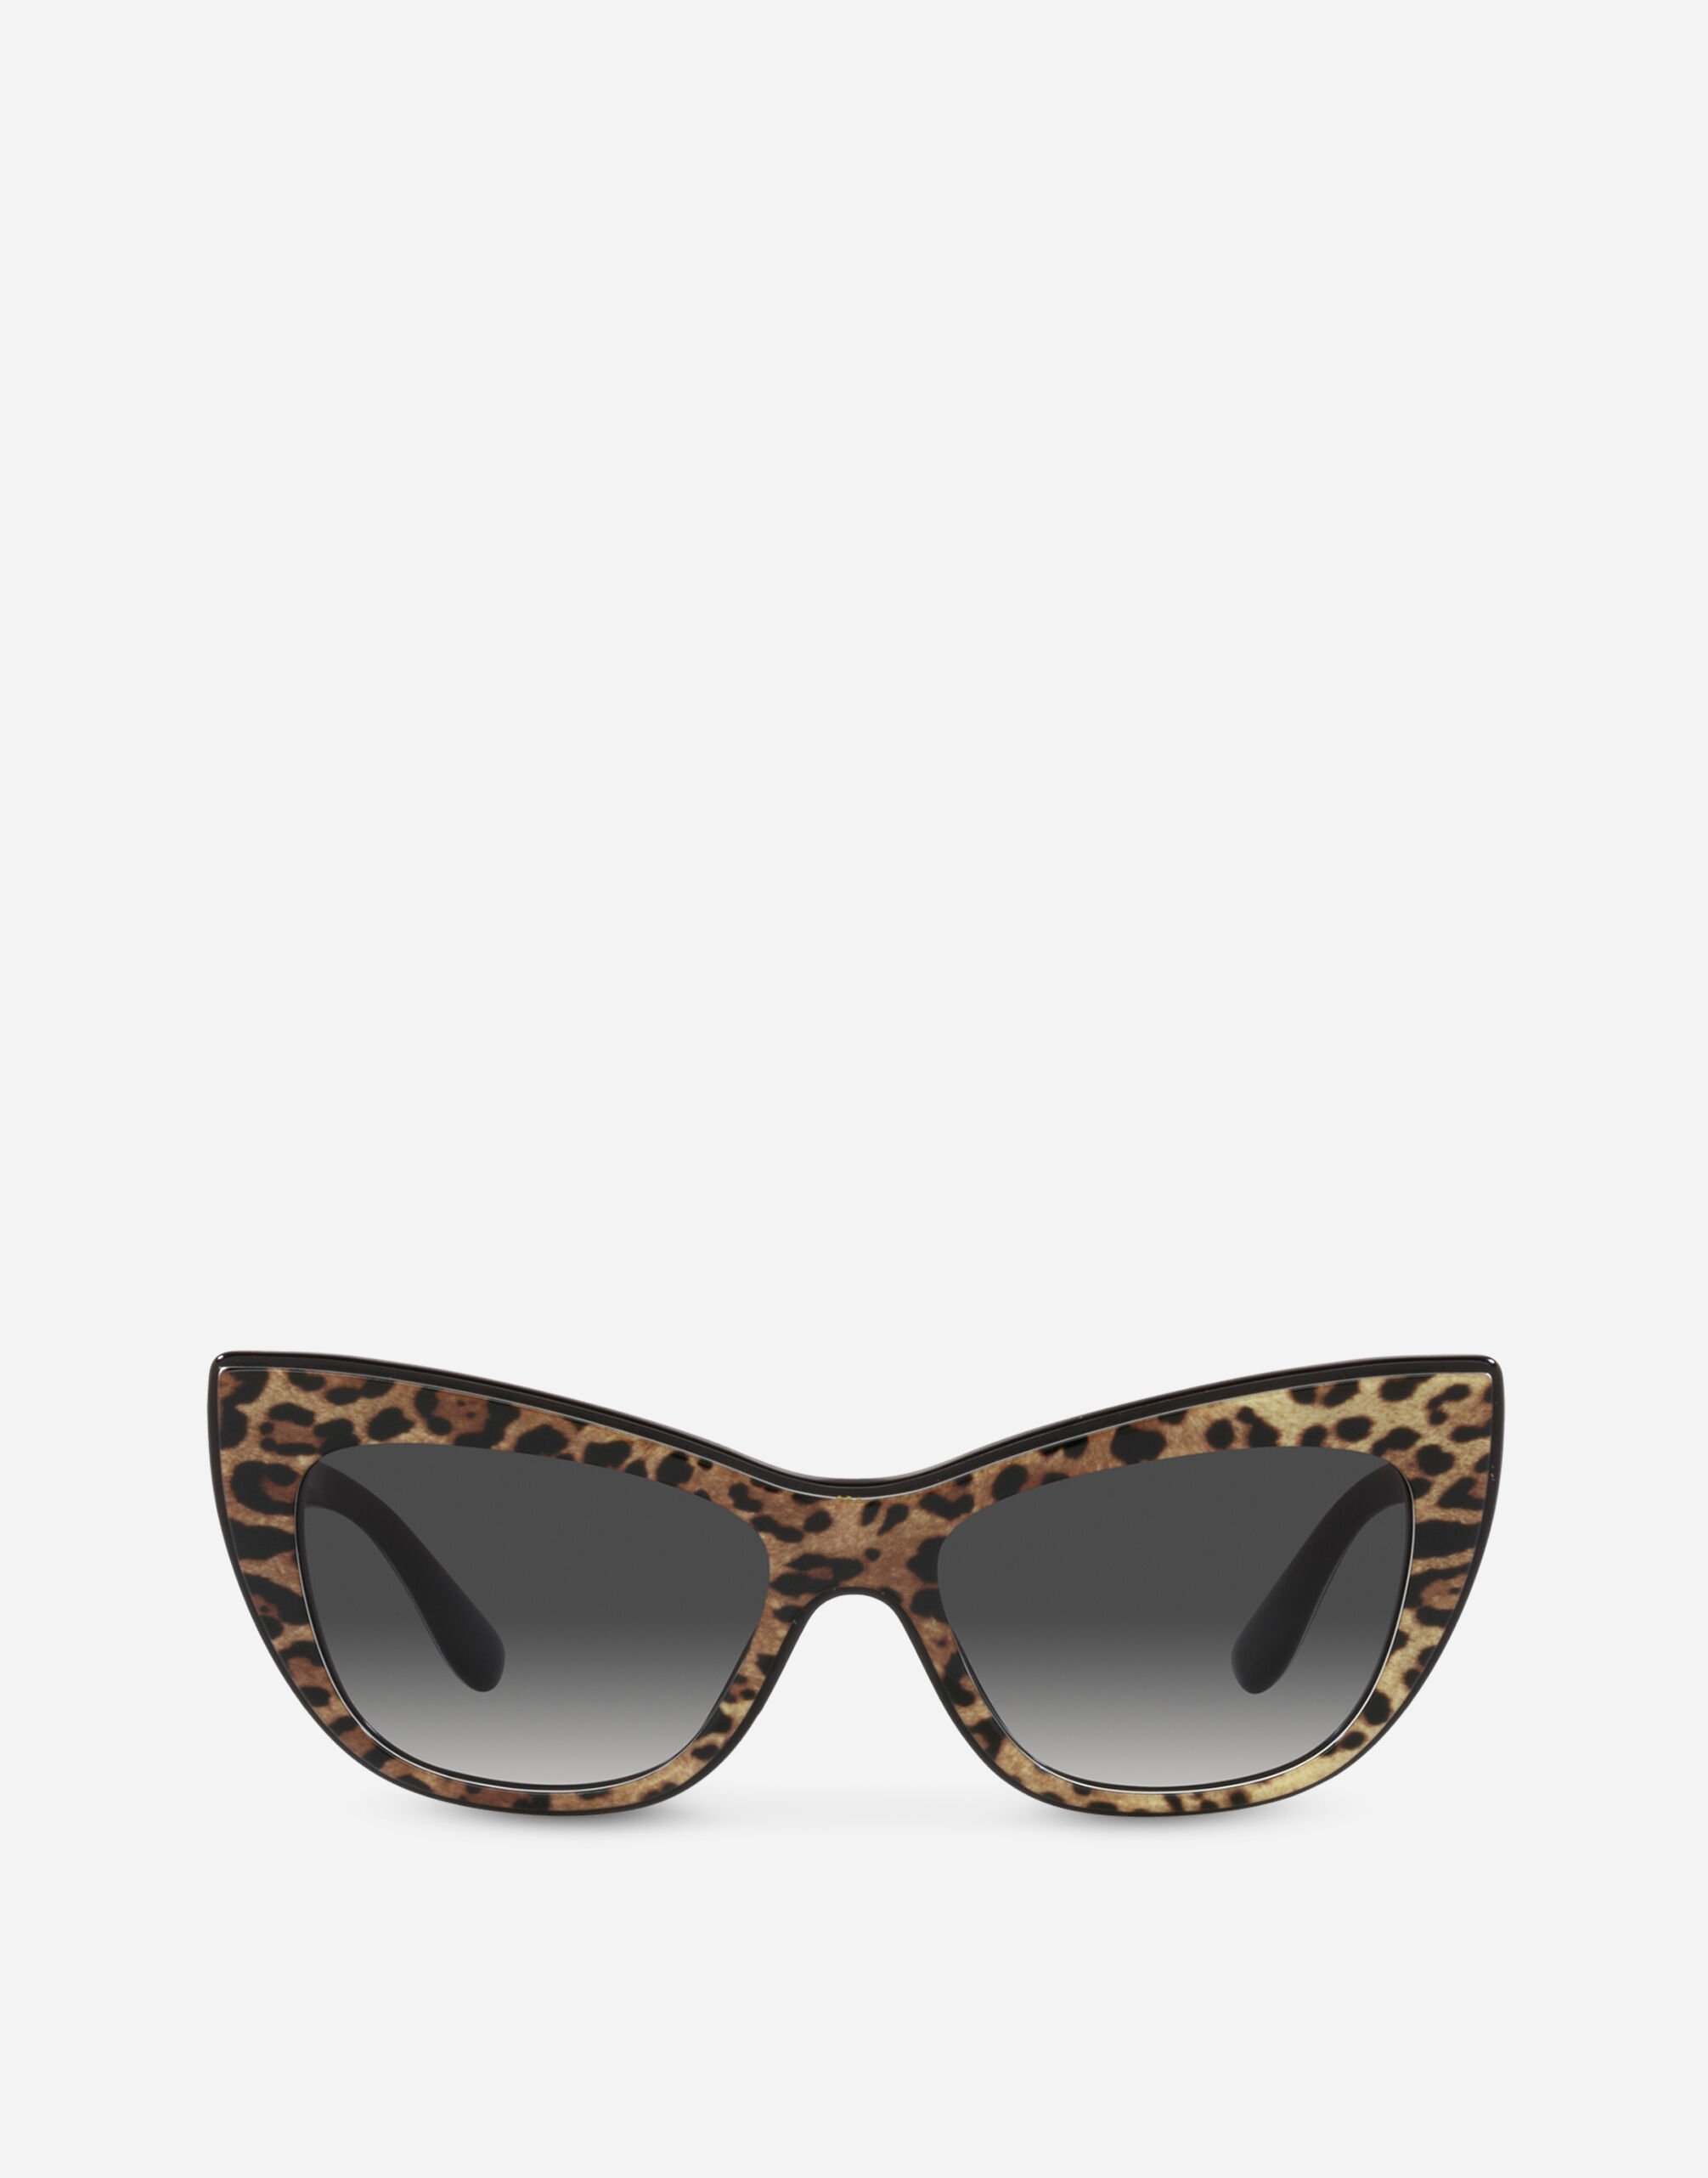 Dolce & Gabbana New print sunglasses Black BB6003A1001